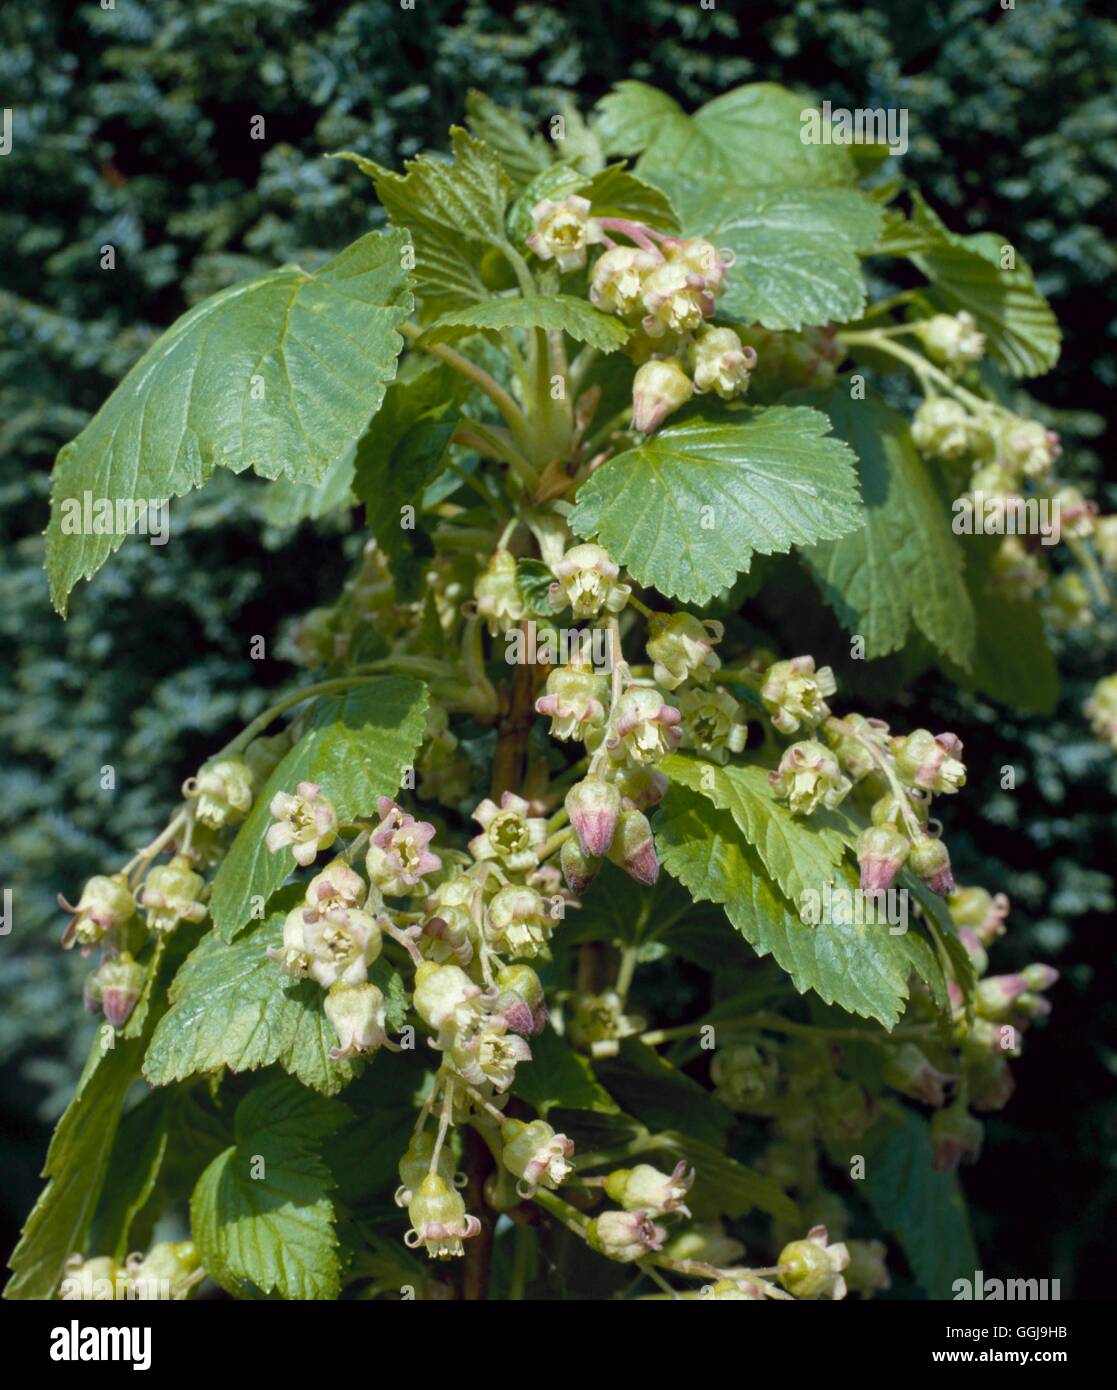 Blackcurrant - showing flowers - (Ribes nigrum)   FRU049845 Stock Photo